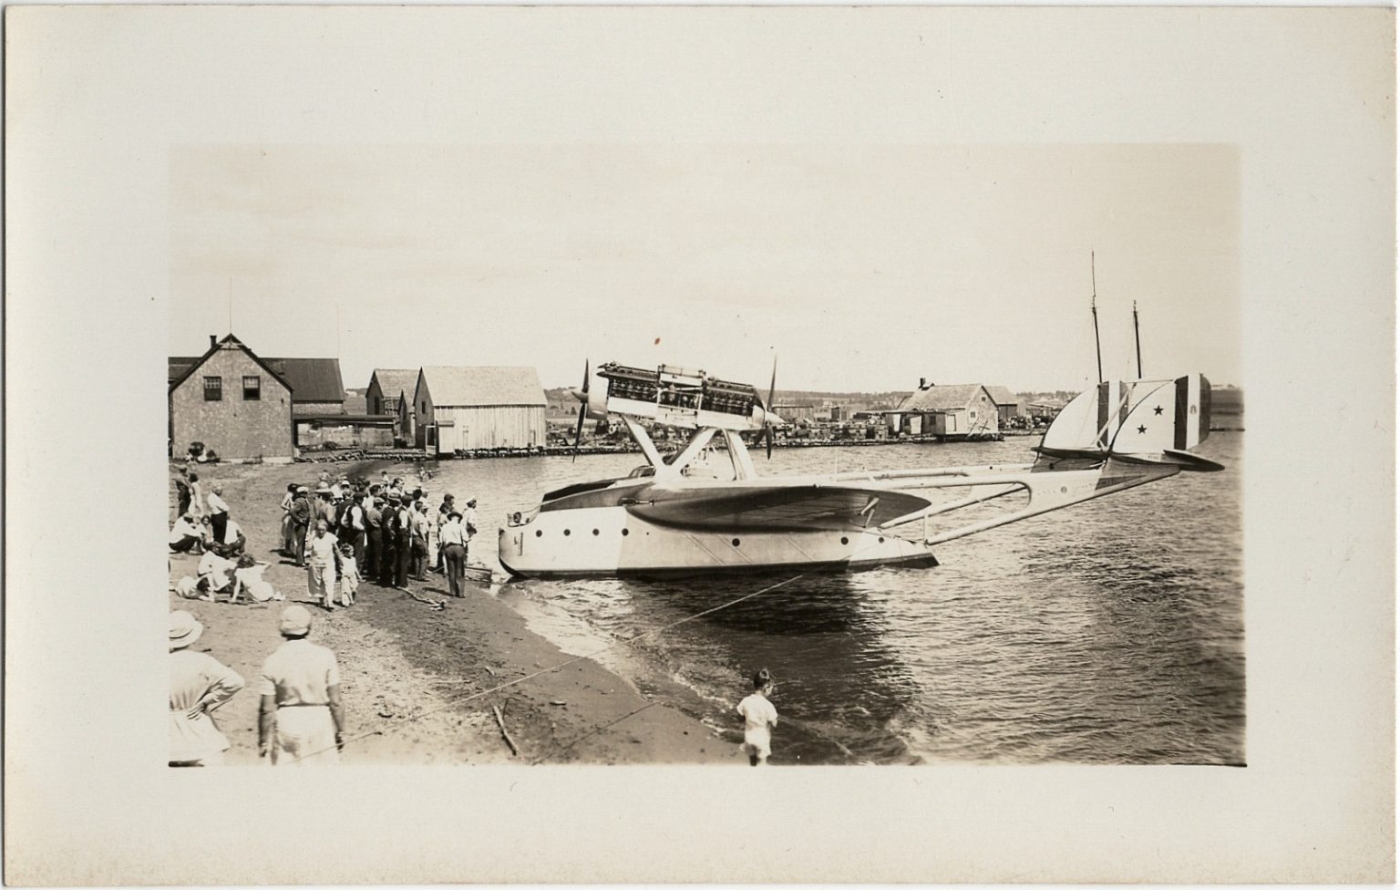 Historic postcard image of Balbo seaplane flight in water at Victoria, PEI, 1933